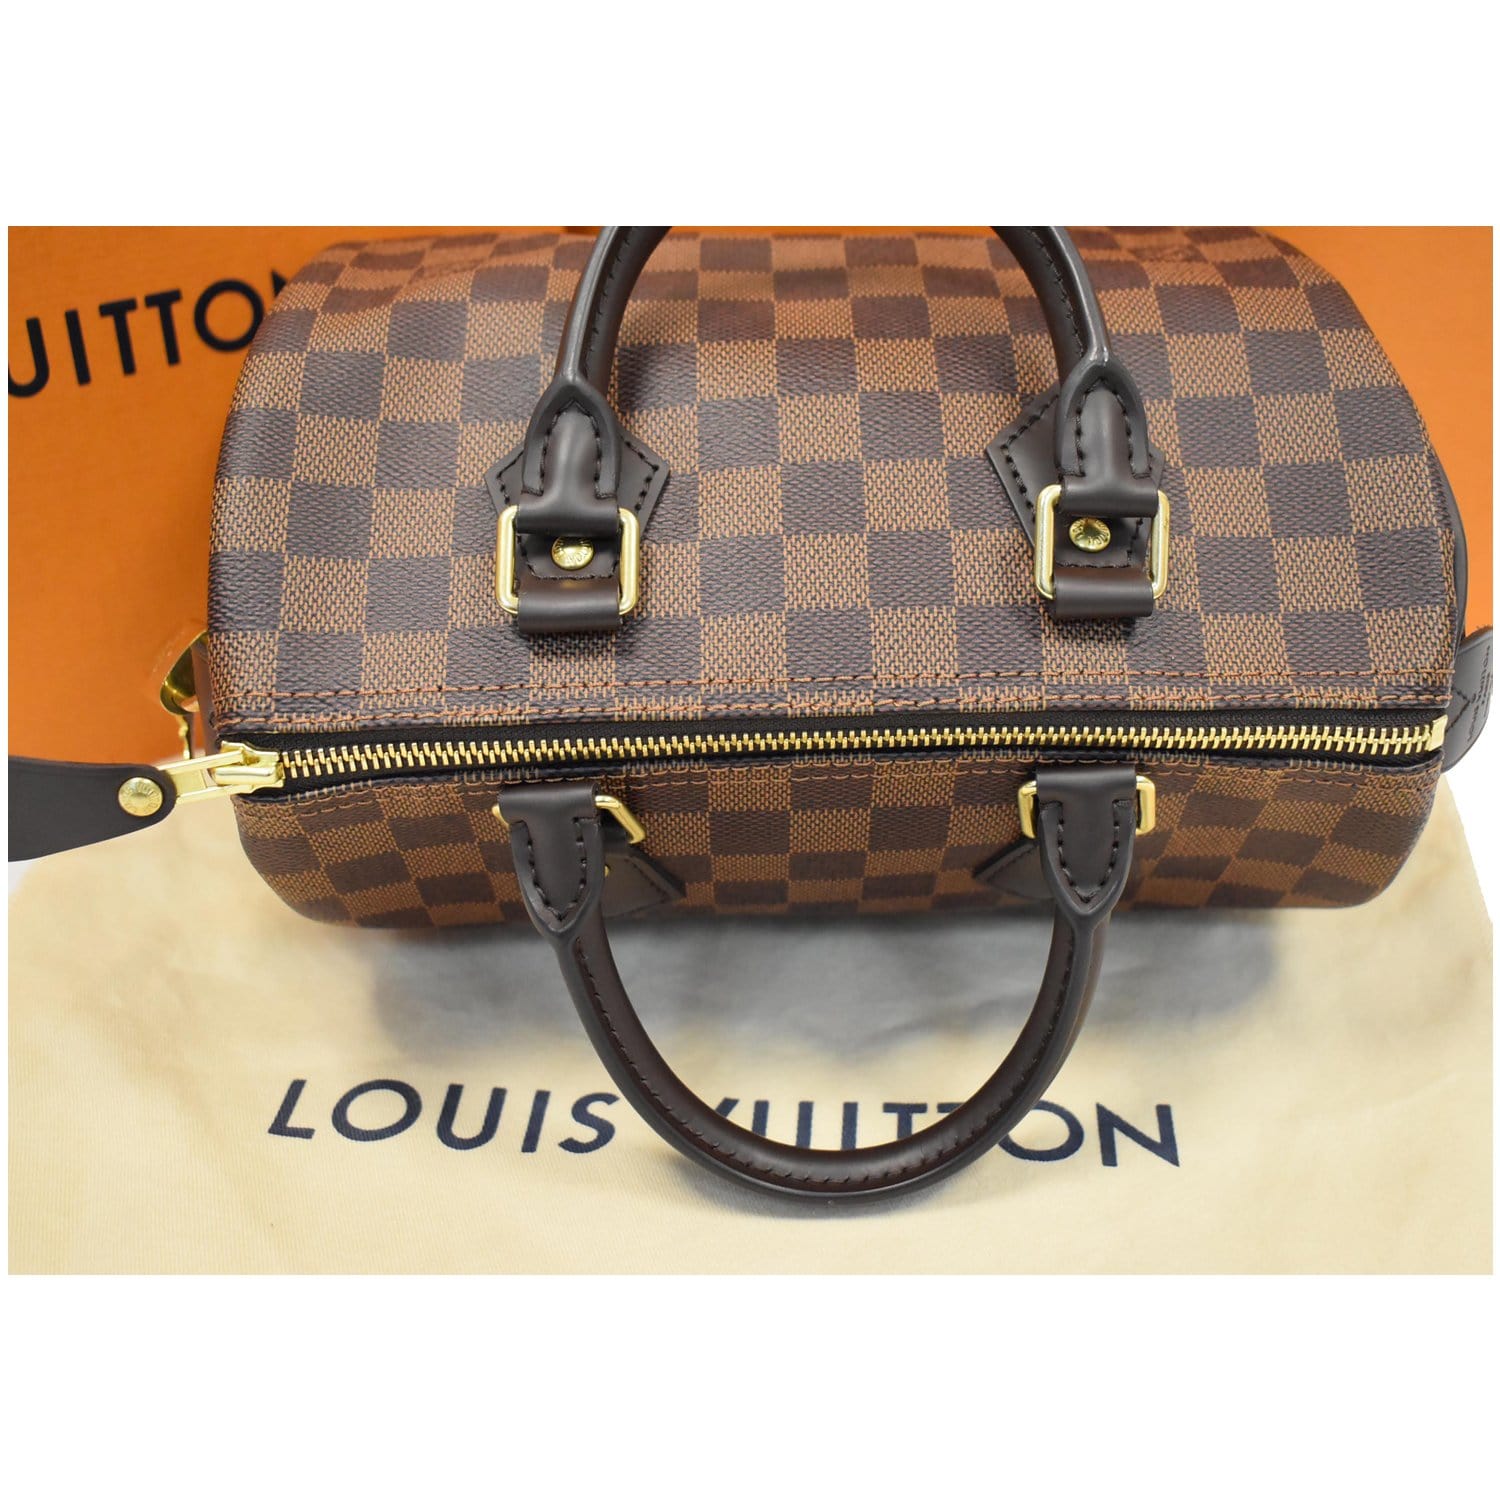 Speedy leather handbag Louis Vuitton Brown in Leather - 32530258